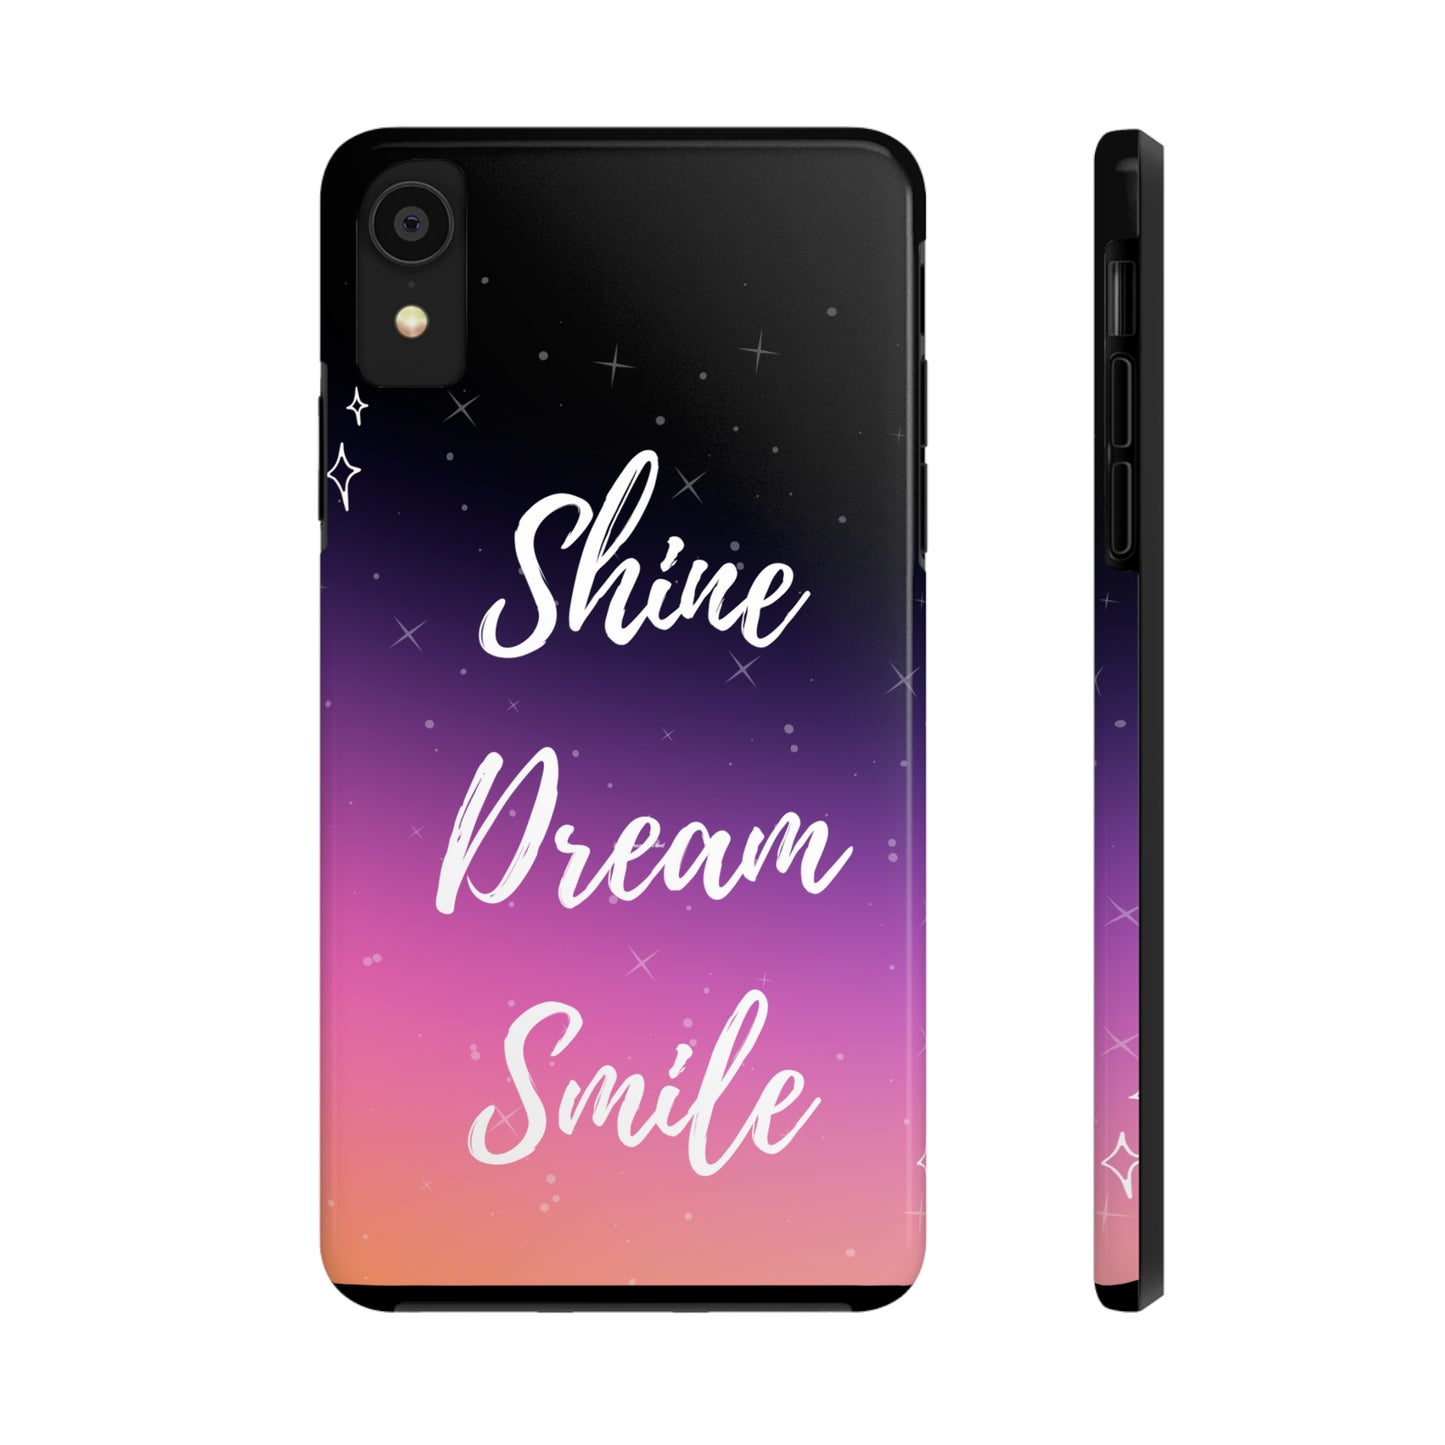 Shine, Dream, Smile Mikrokosmos phone case